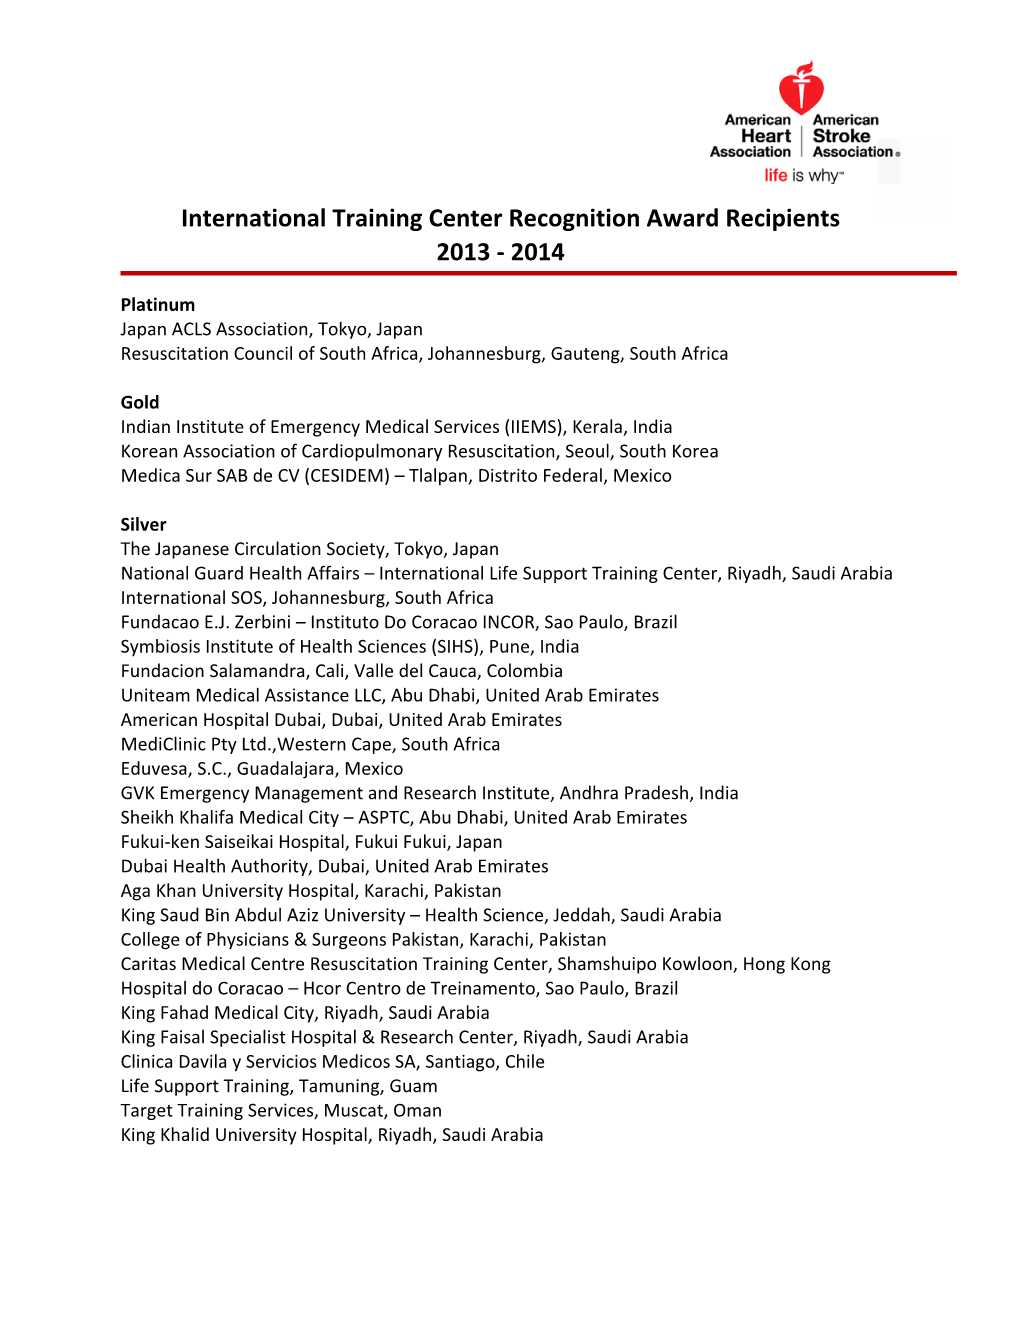 International Training Center Recognition Award Recipients 2013 ‐ 2014